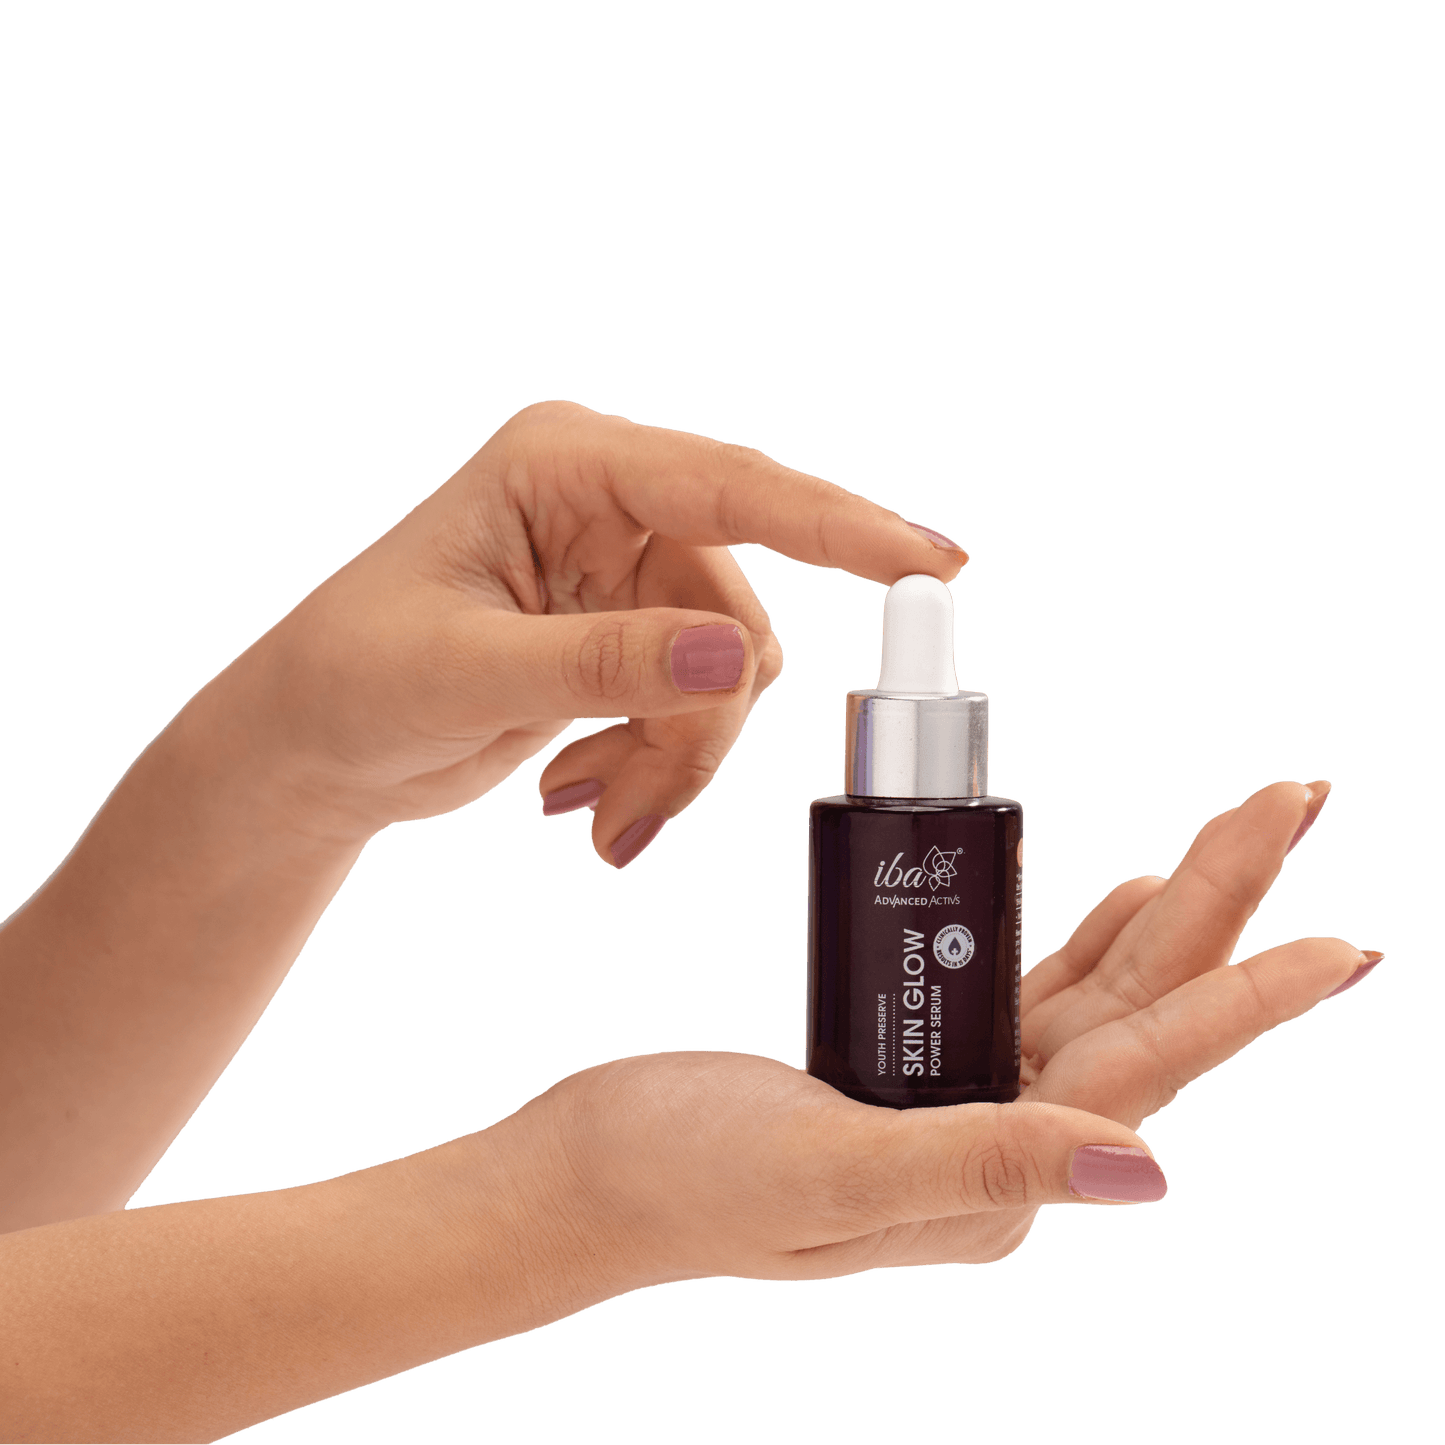 Iba Say Hello to Glowing Skin Kit – Vitamin C & Hyaluronic Acid Face Wash, Serum, Moisturizer